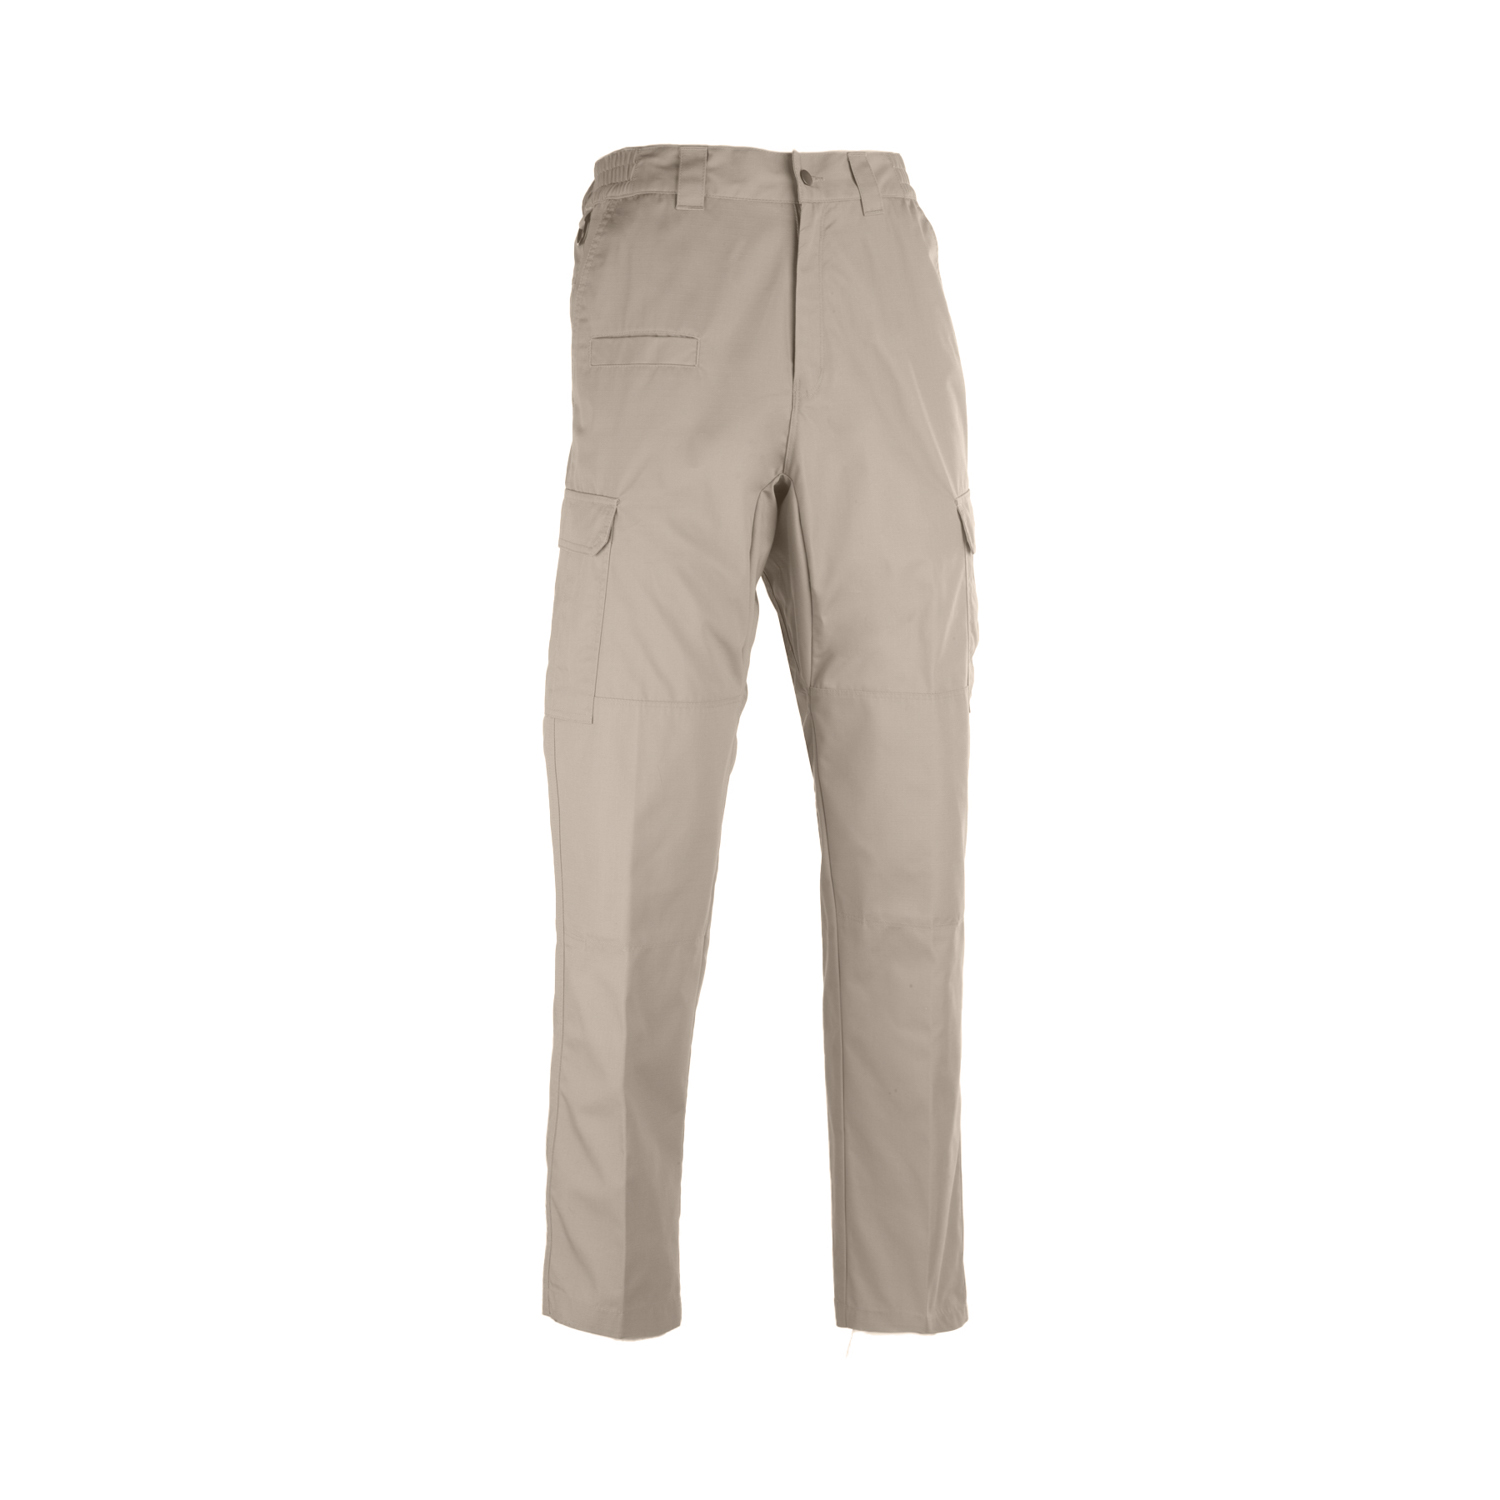 Blauer 6-Pocket Polyester Pants (8657T)